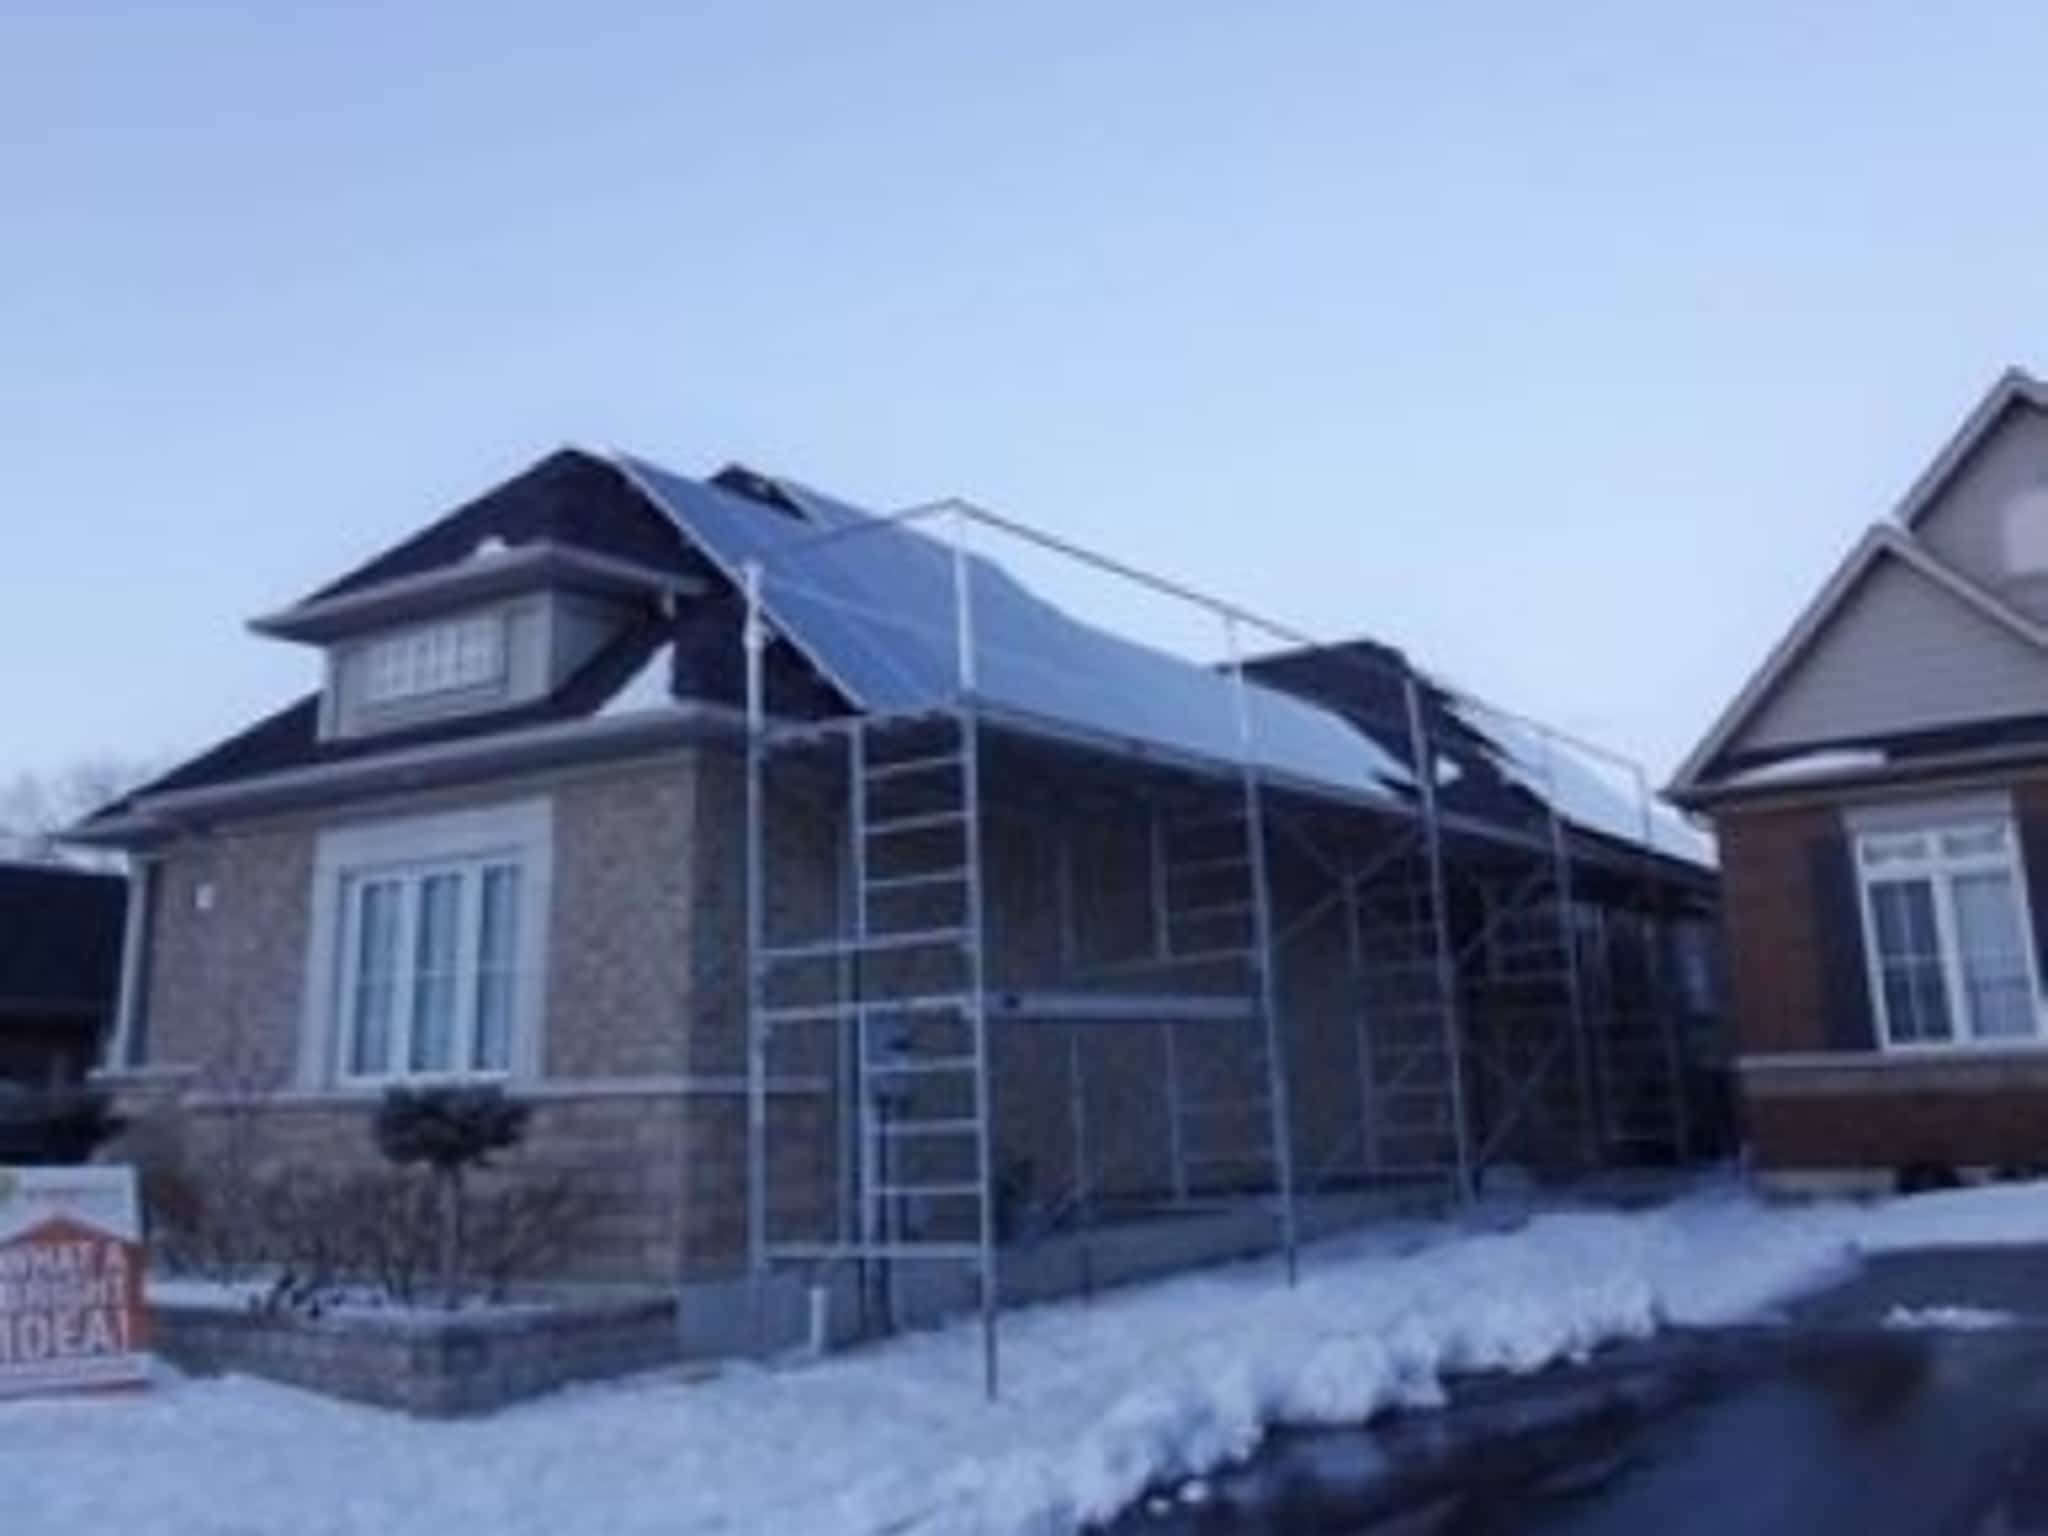 photo Ontario Solar Installers